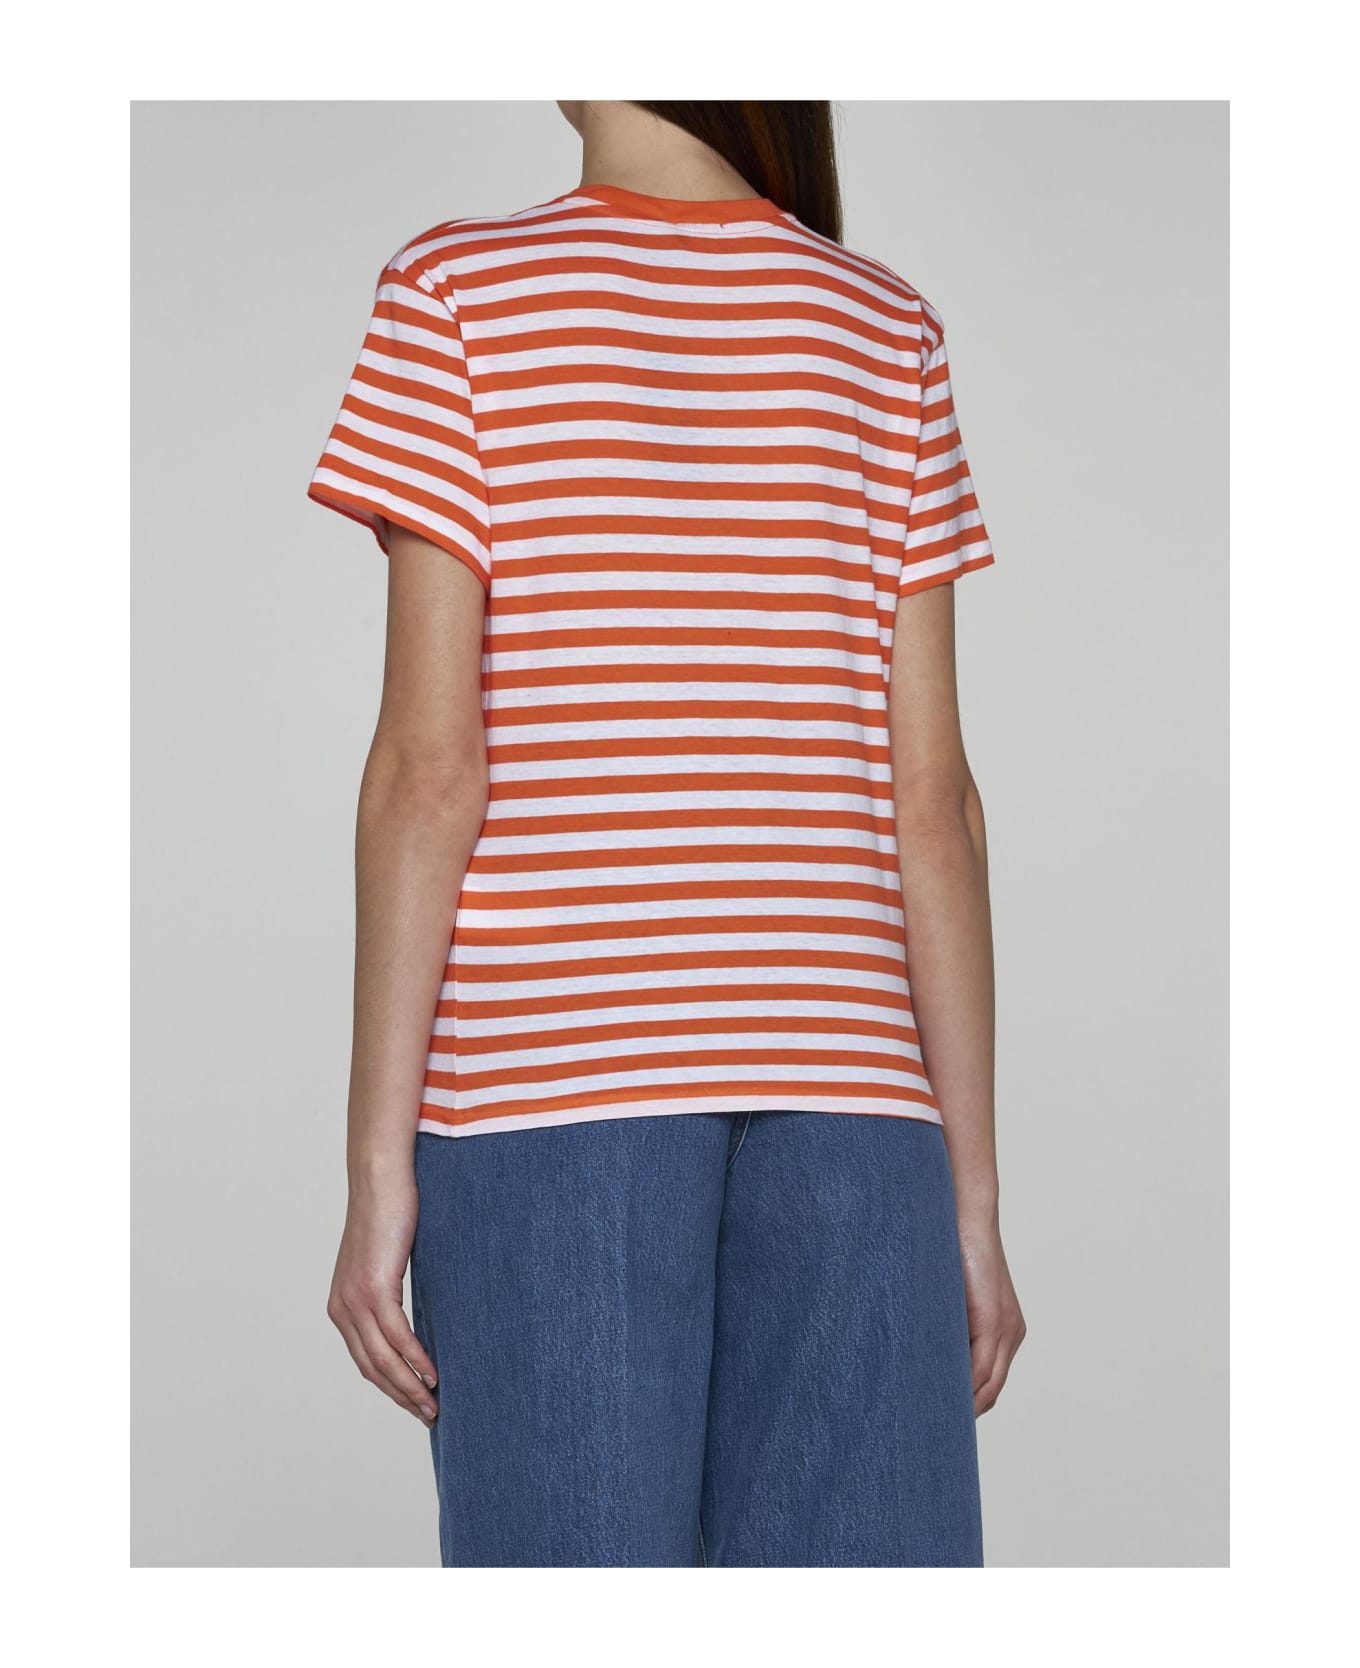 Ralph Lauren Striped Cotton T-shirt - Orange White Tシャツ